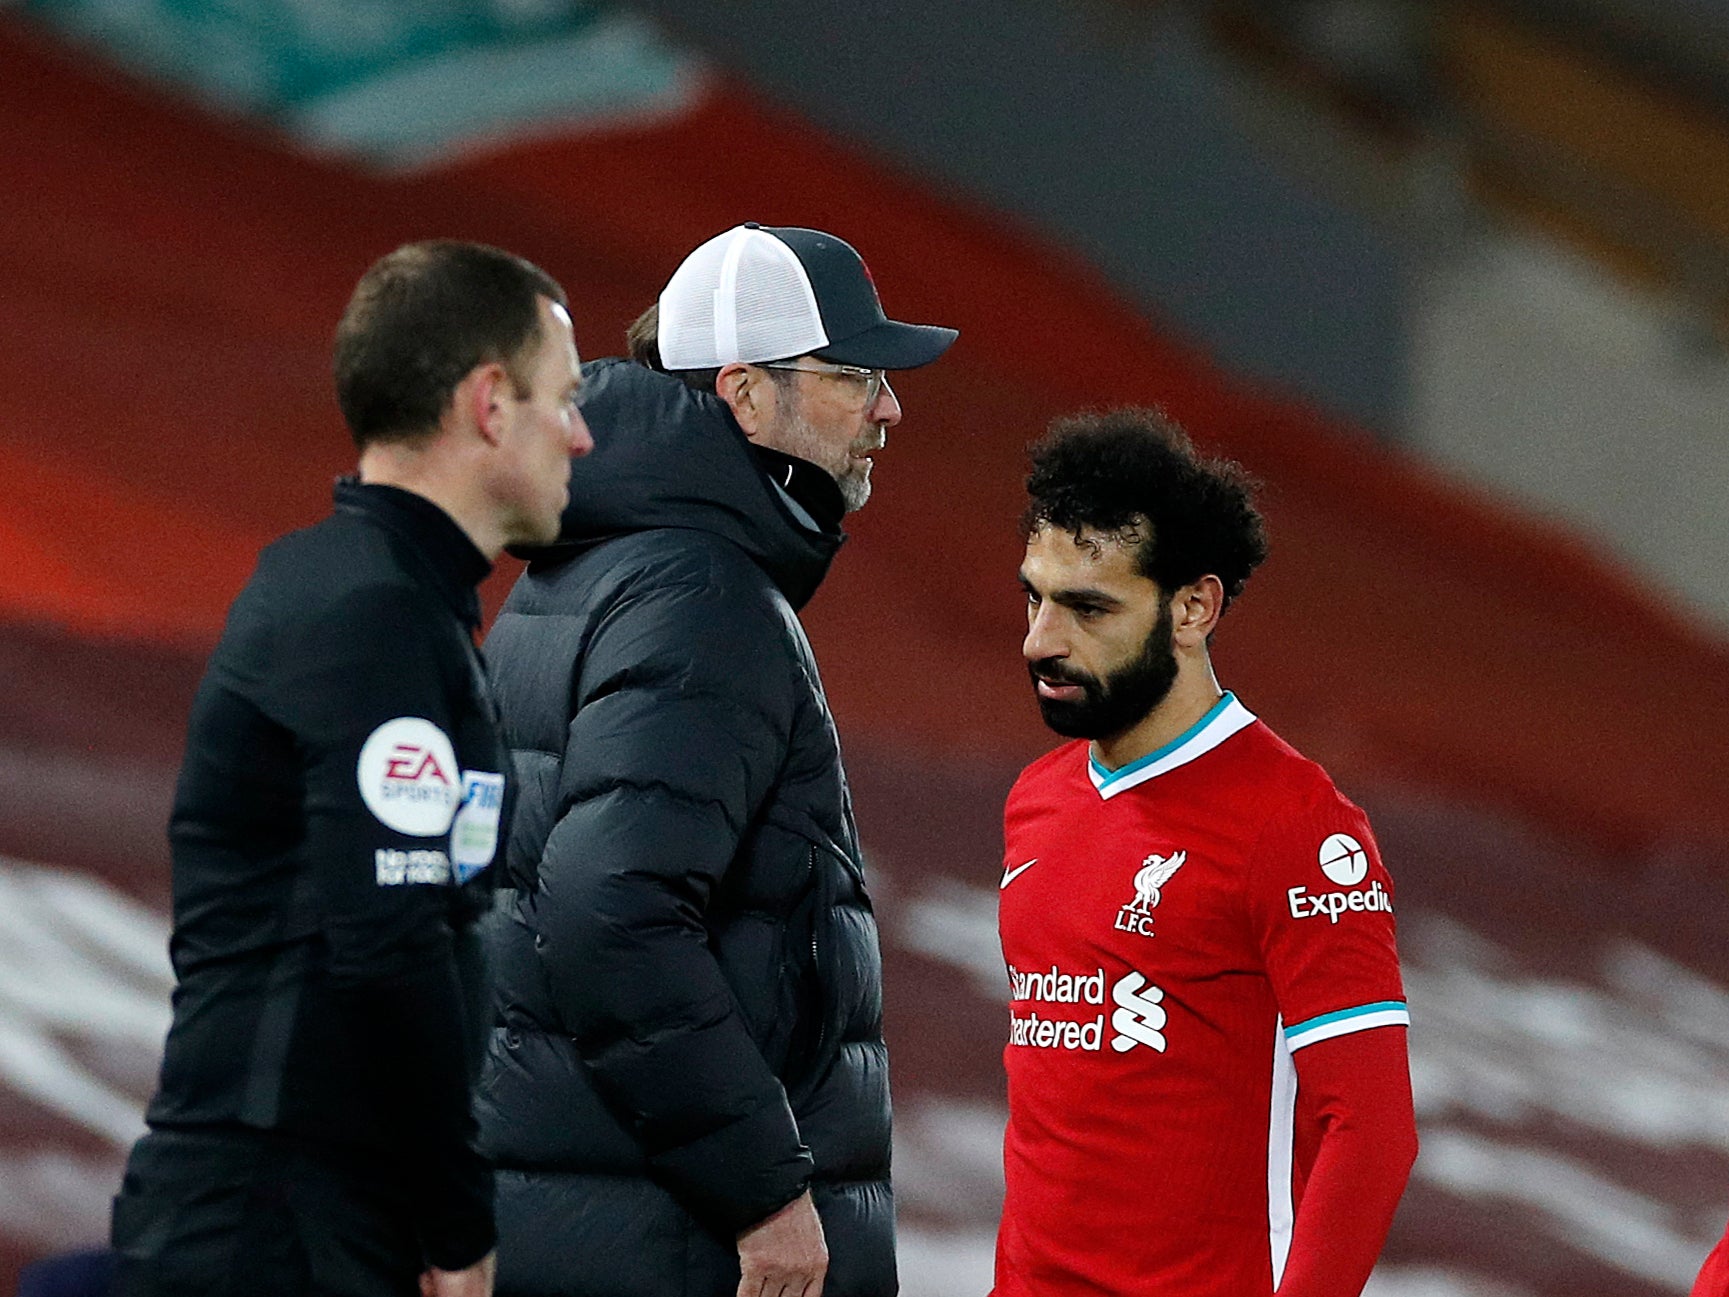 Mohamed Salah walks past Jurgen Klopp after being substituted